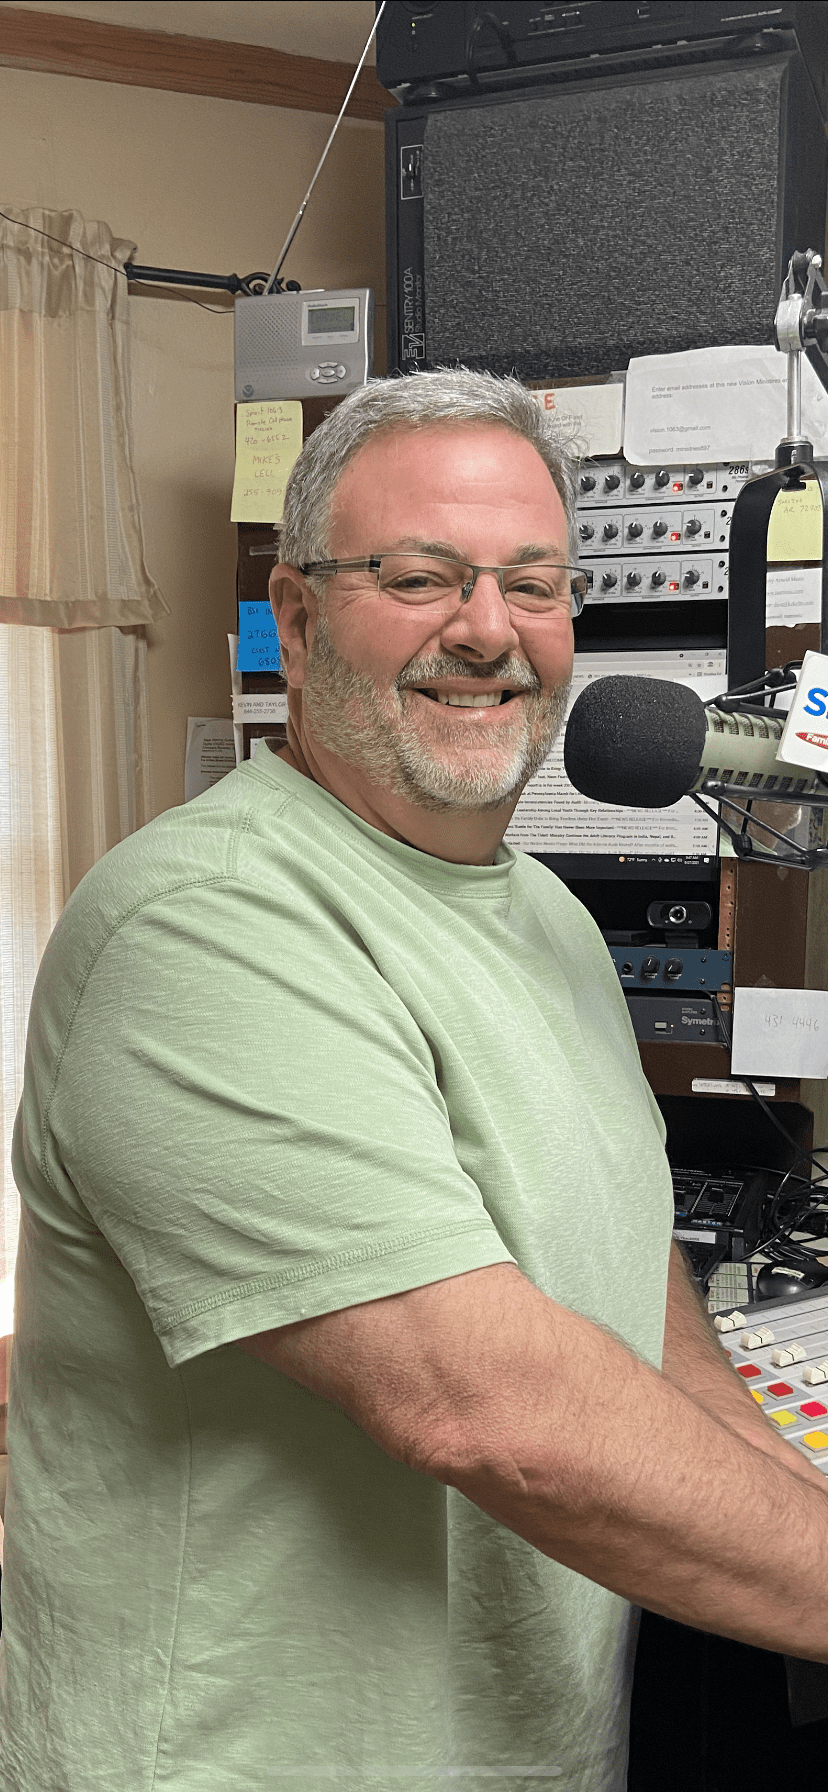 Jay Lynch, Spirit 106.3, family friendly Christian radio